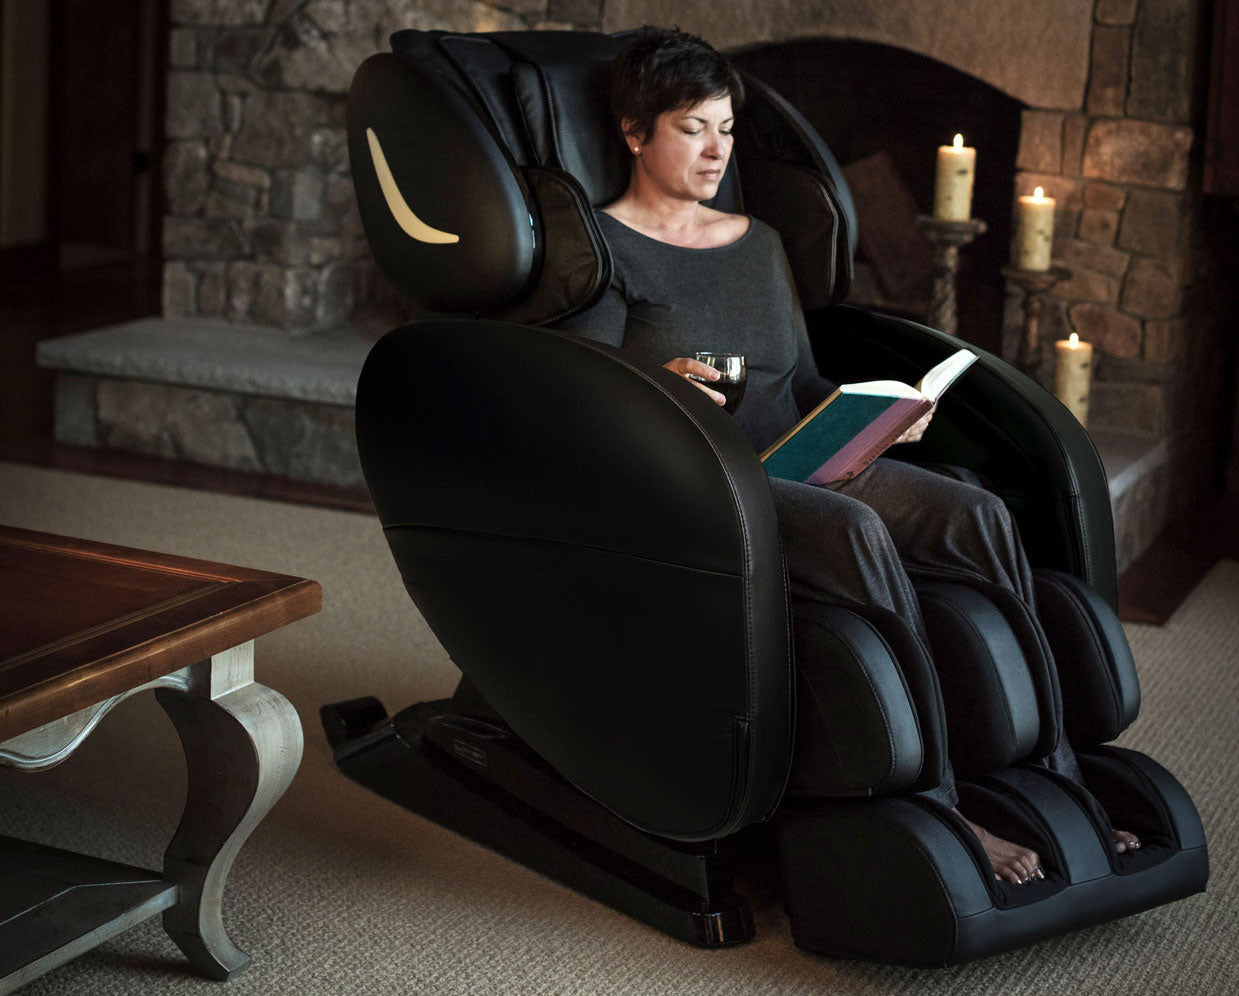 Infinity SmartChair X3 Massage Chair